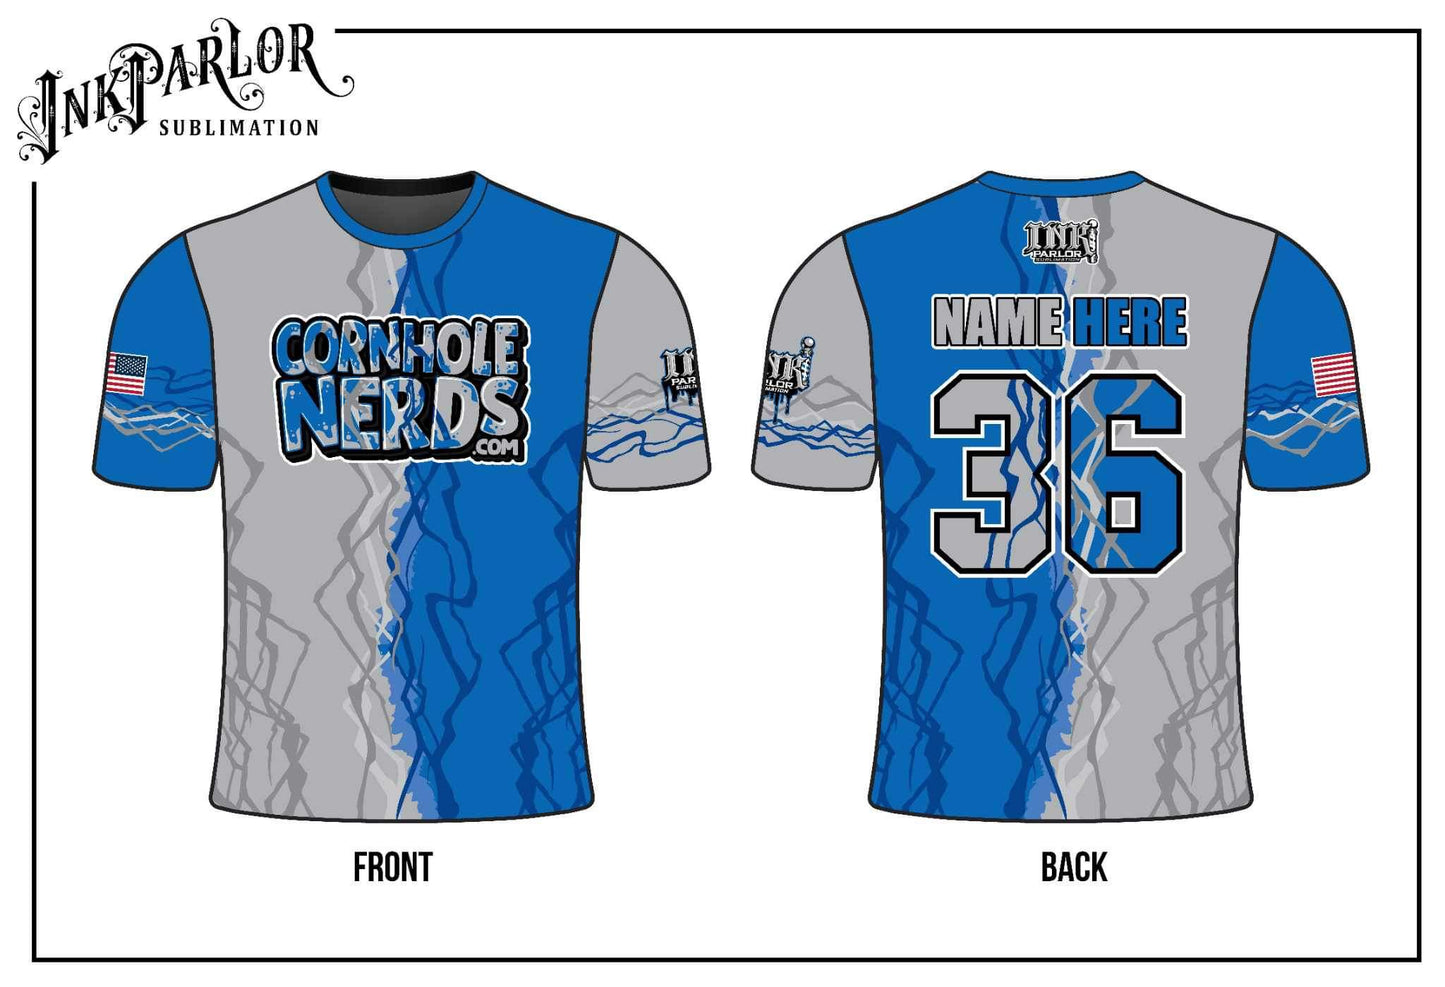 Cornhole Nerds two tone blue/grey  jersey